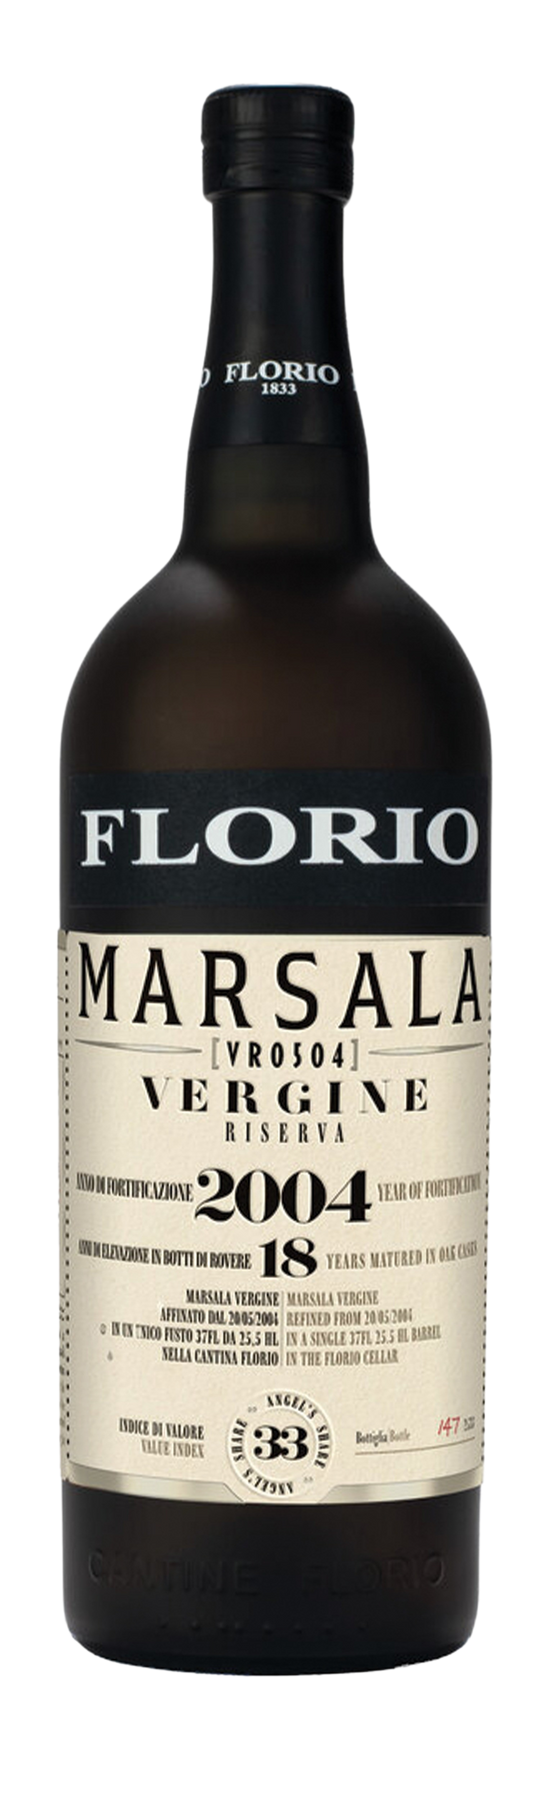 Florio Vergine Riserva 19% 2004 75cl Marsala